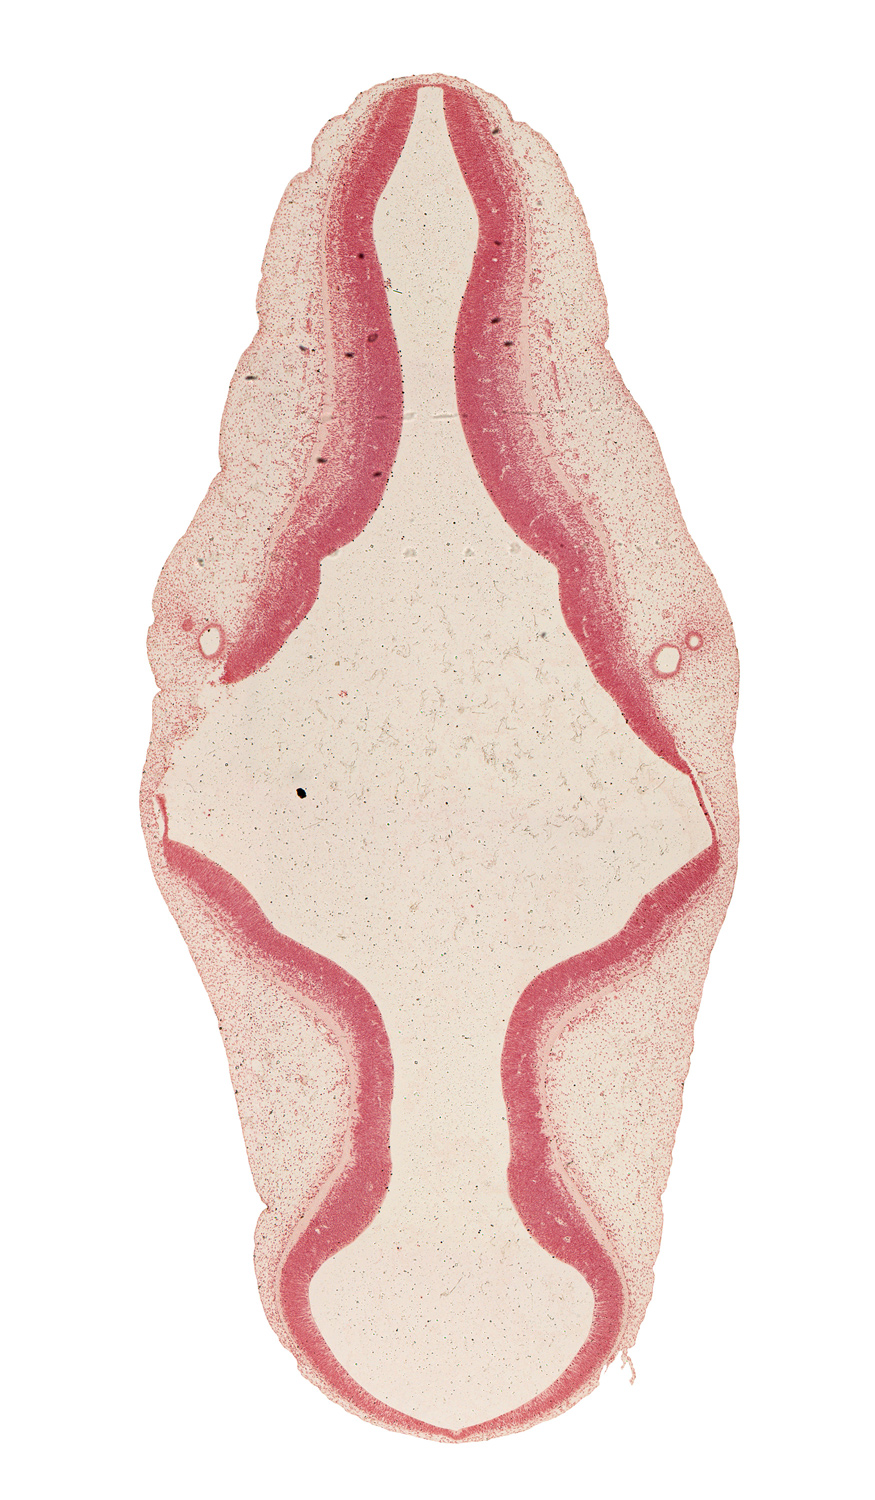 alar plate(s), artifact separation(s), endolymphatic duct, intermediate zone, marginal zone, mesencephalon (M2), metencephalon, myelencephalon, roof plate, sulcus limitans, trochlear nerve (CN IV), ventricular zone, vestibular part of otic vesicle